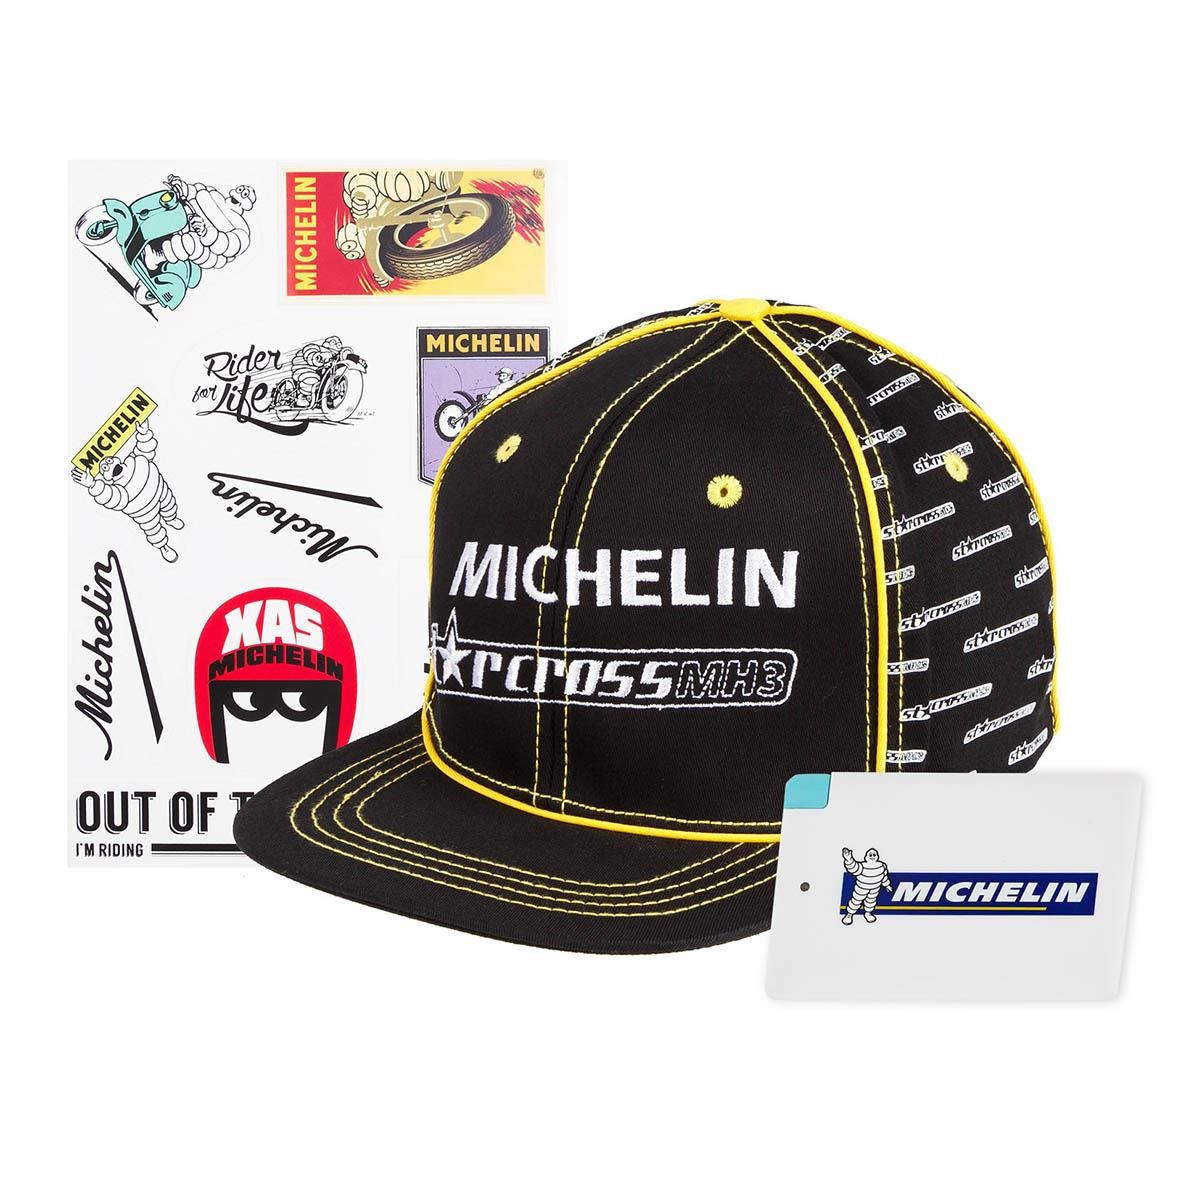 Michelin Power Bank incl. Cap and sticker sheet